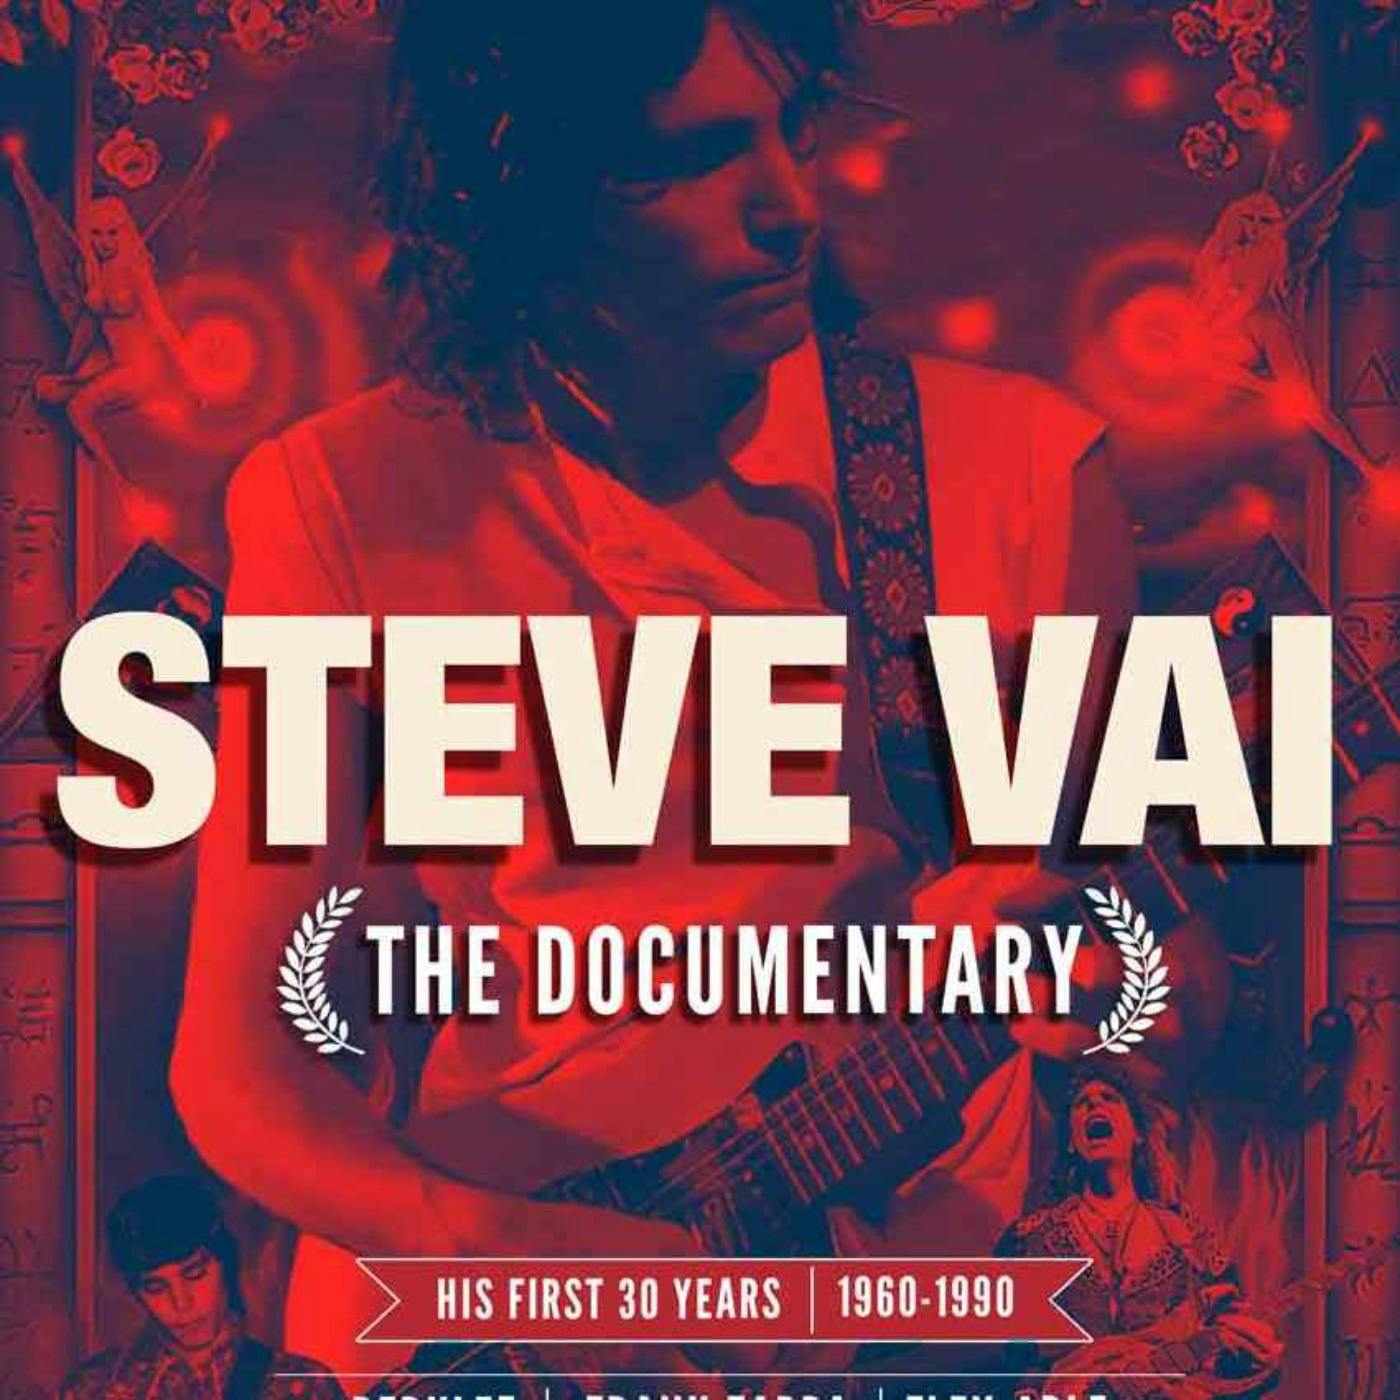 Steve Vai - His First 30 Years | Audio Documentary